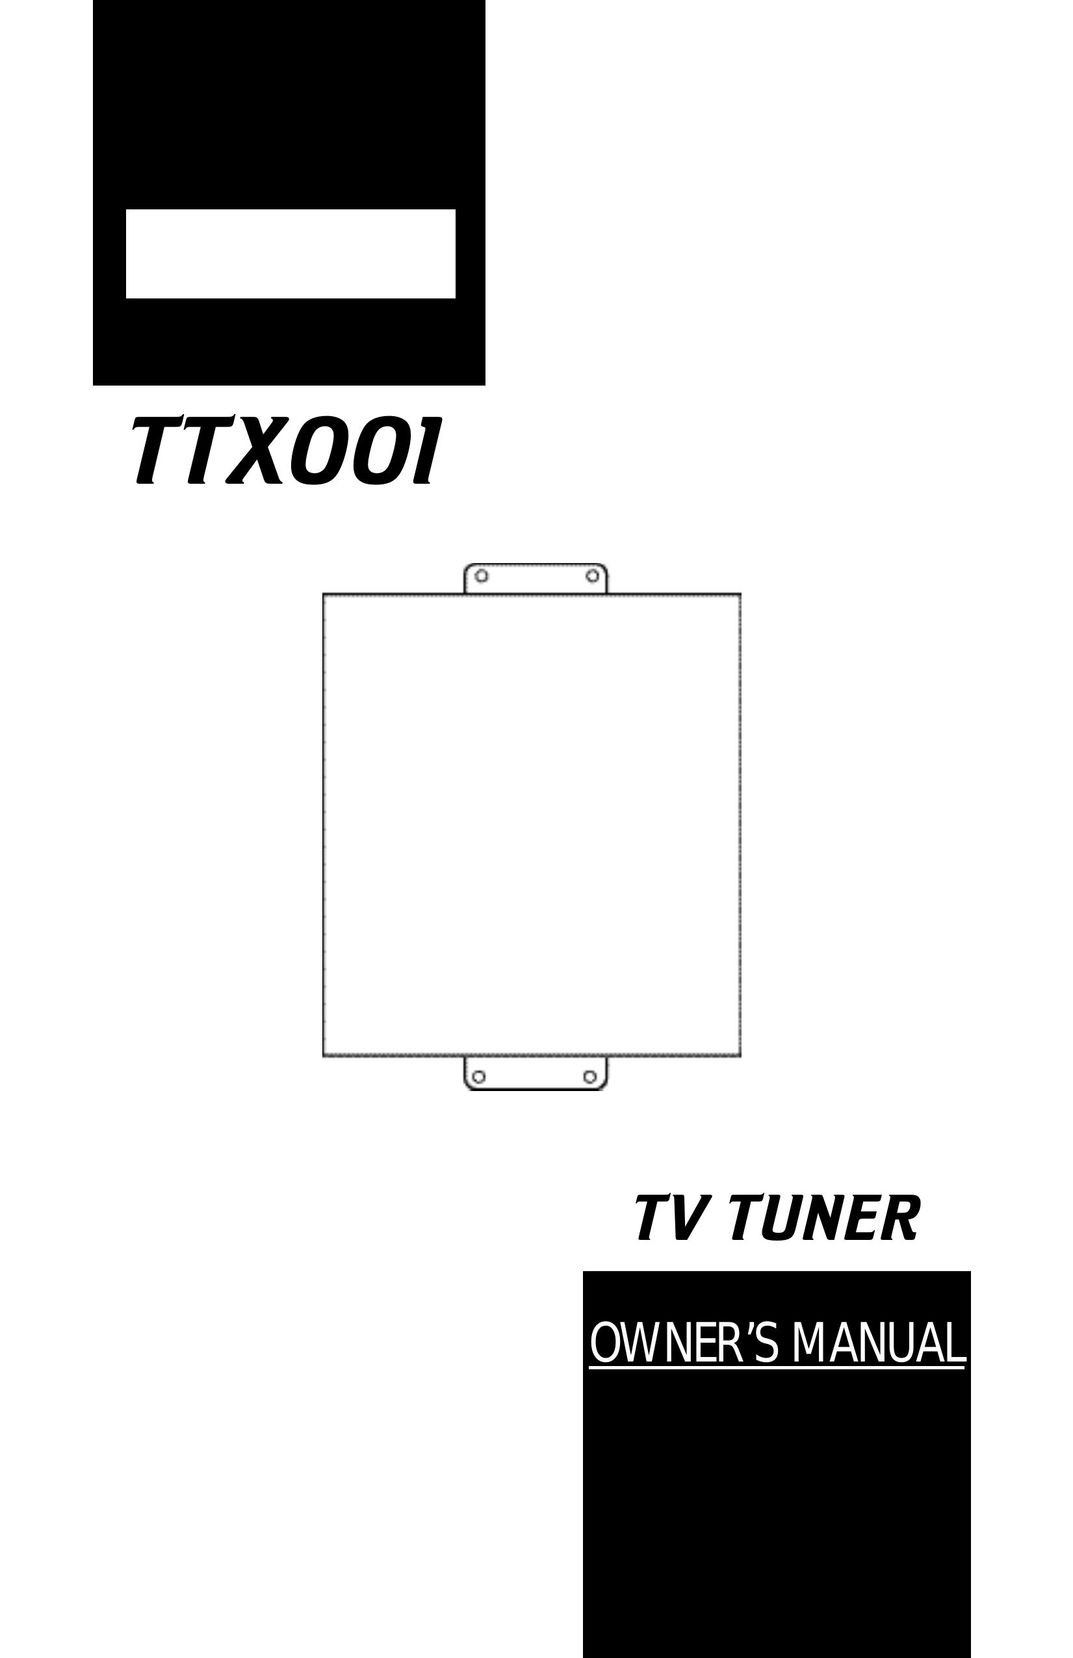 Clarion TTX001 TV Receiver User Manual